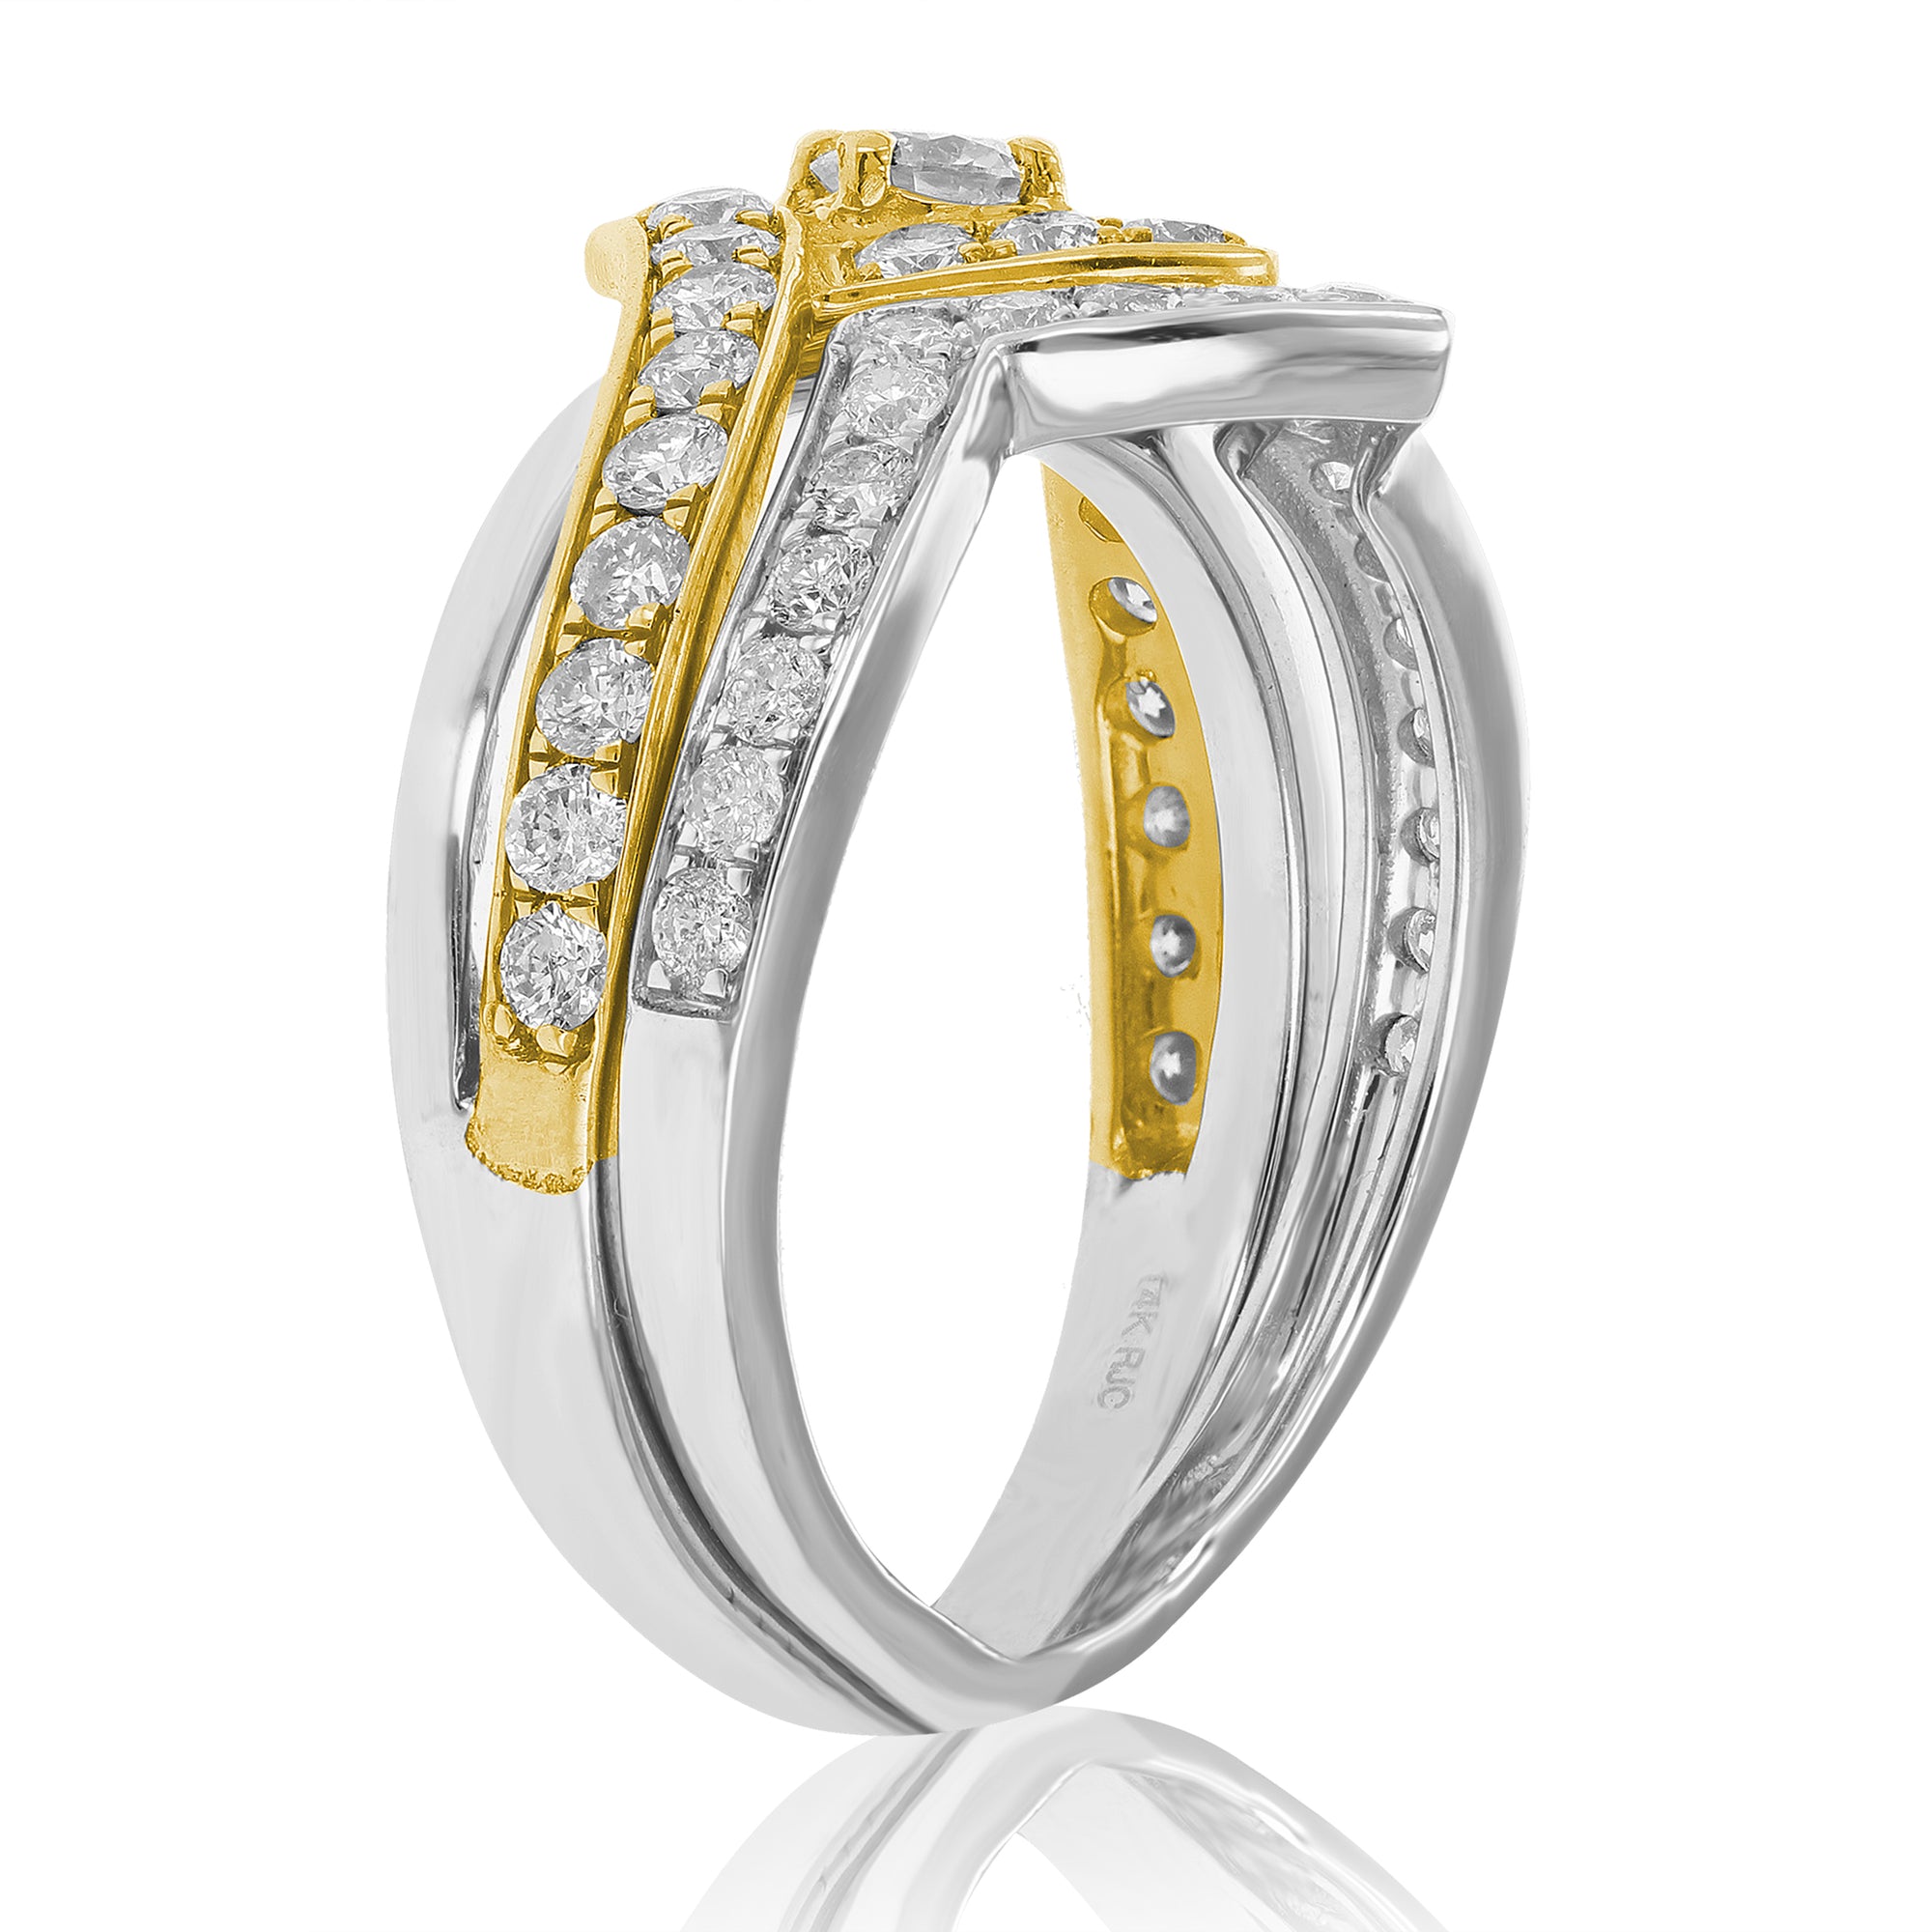 1 cttw Diamond Wedding Engagement Ring Set 14K Two Tone Gold Princess Halo Style